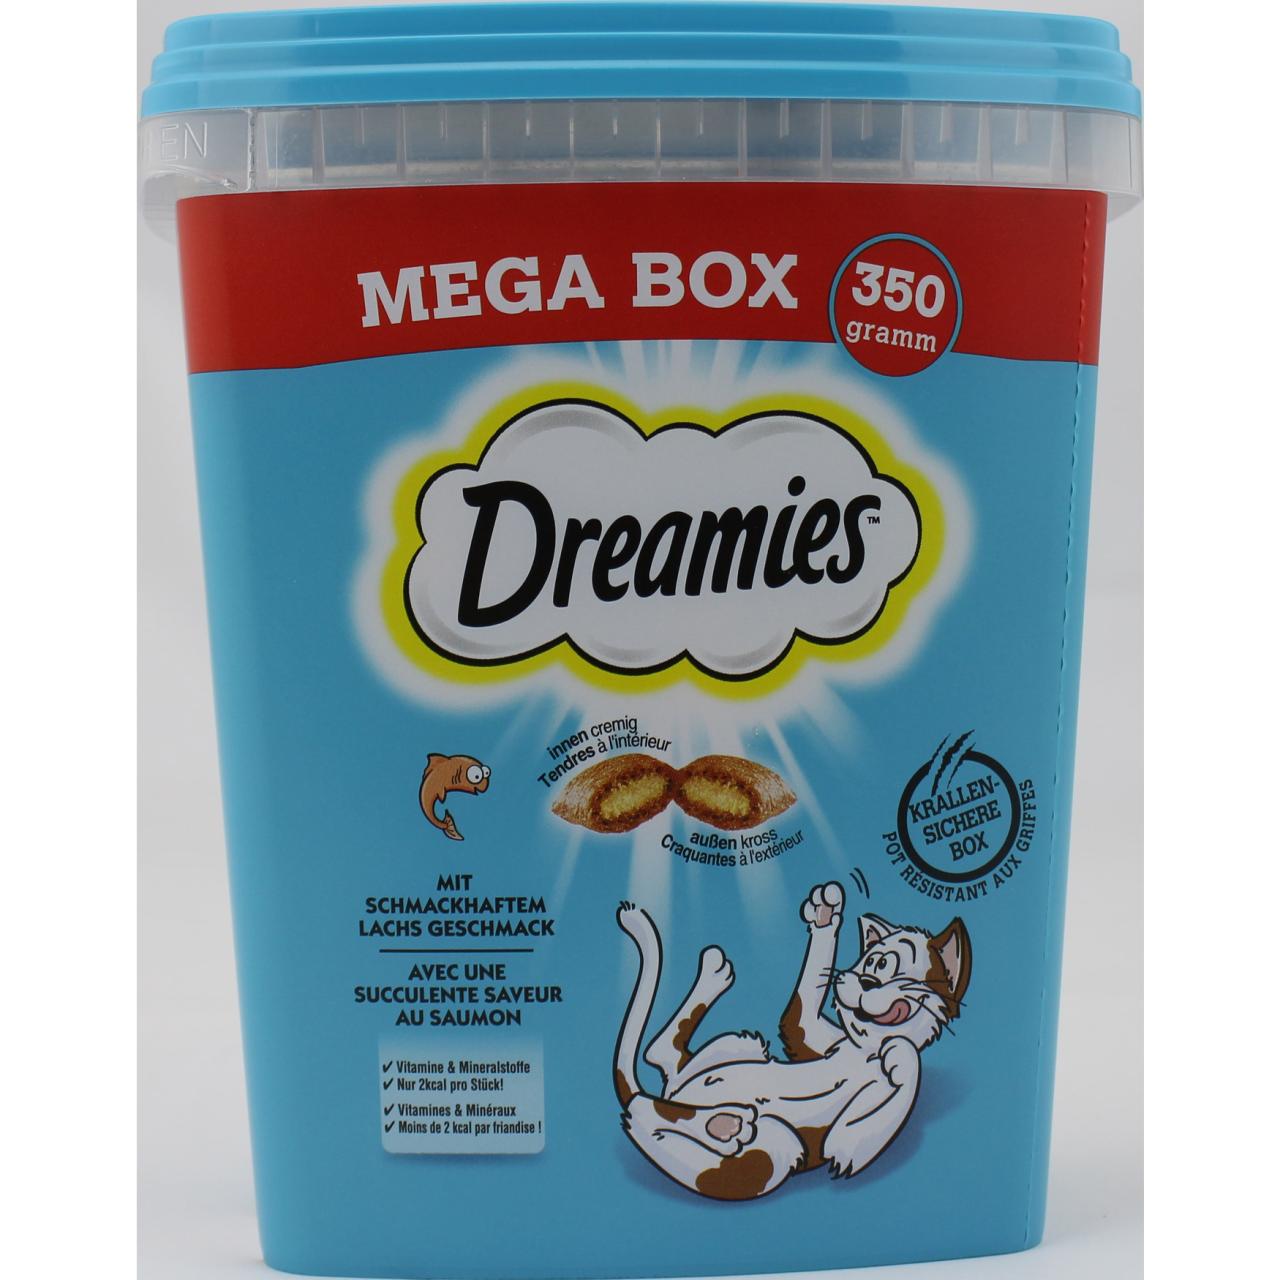 Dreamies Mega Box mit schmackhaften Lachs Geschmack 350g